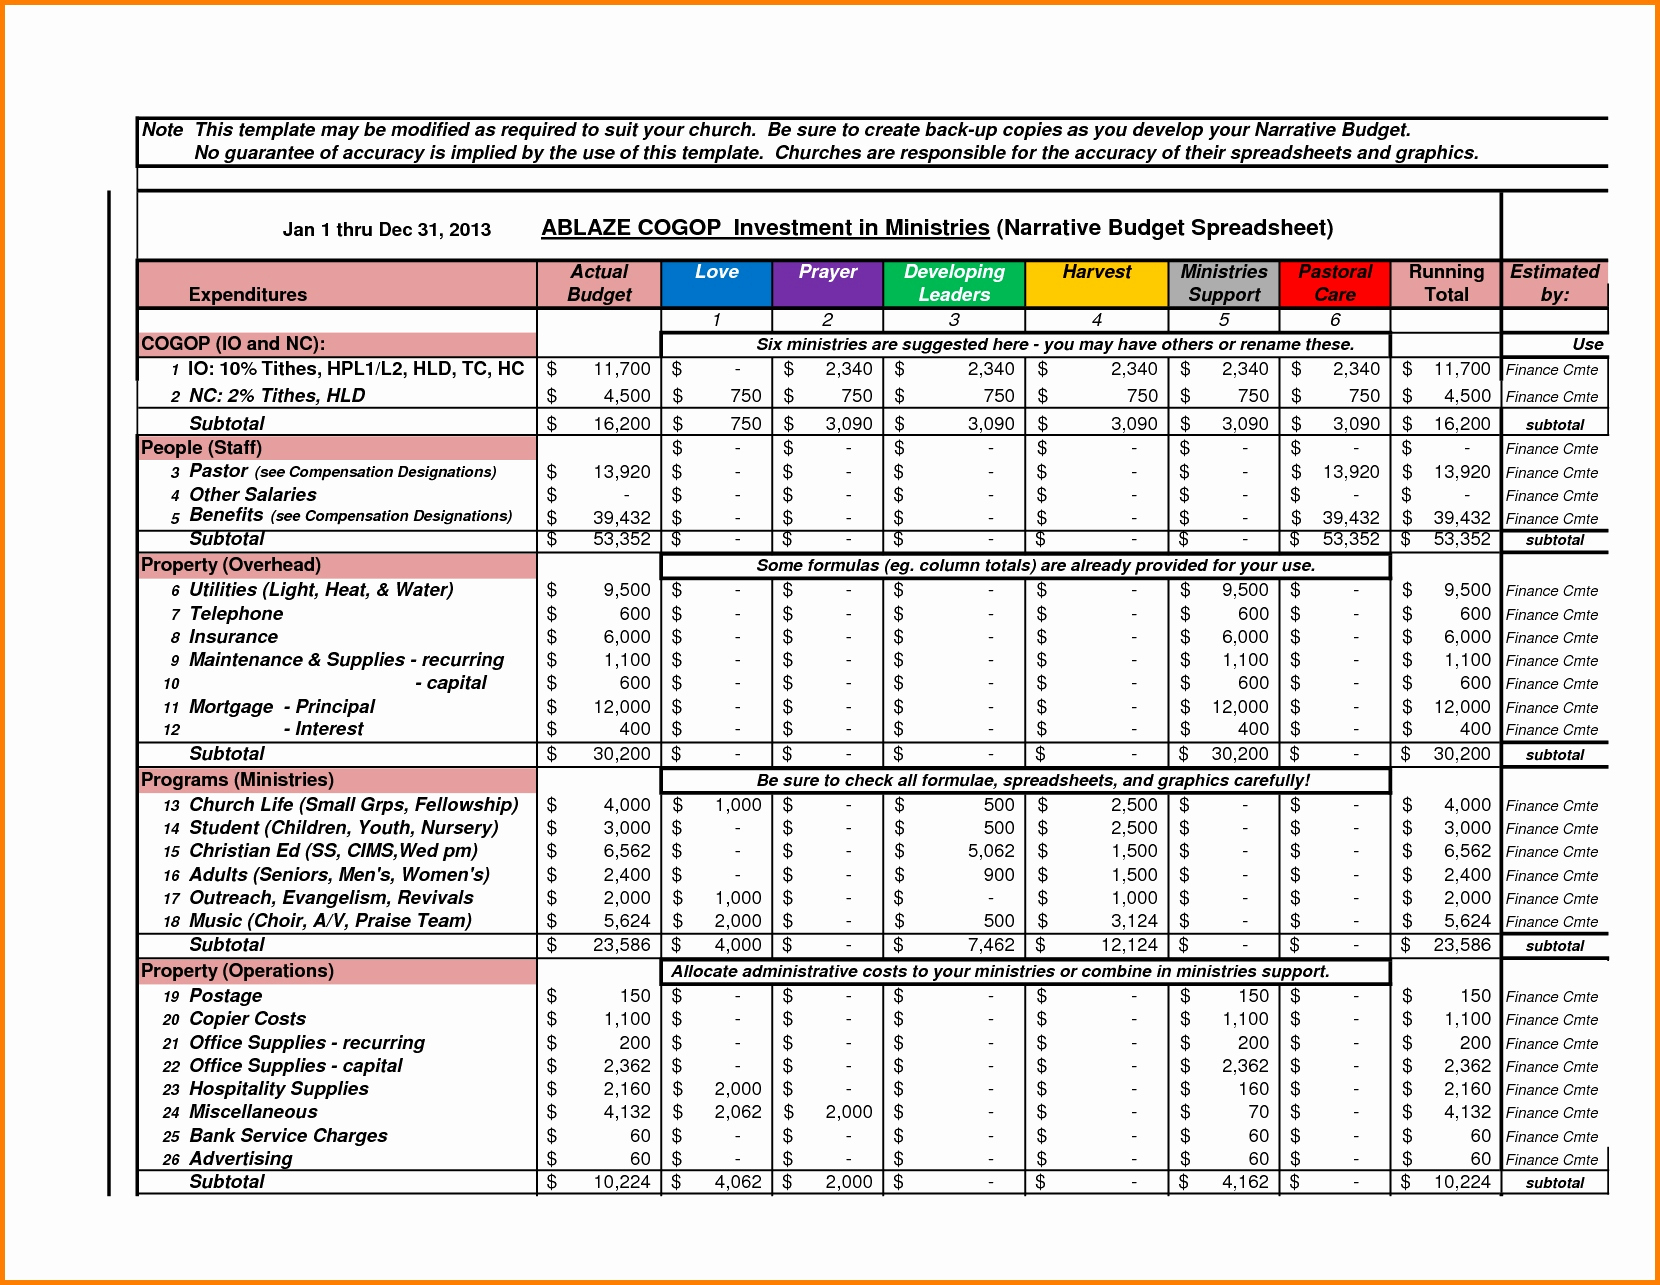 Sample Excel Spreadsheets As Spreadsheet Software Wedding And Excel Spreadsheet Software